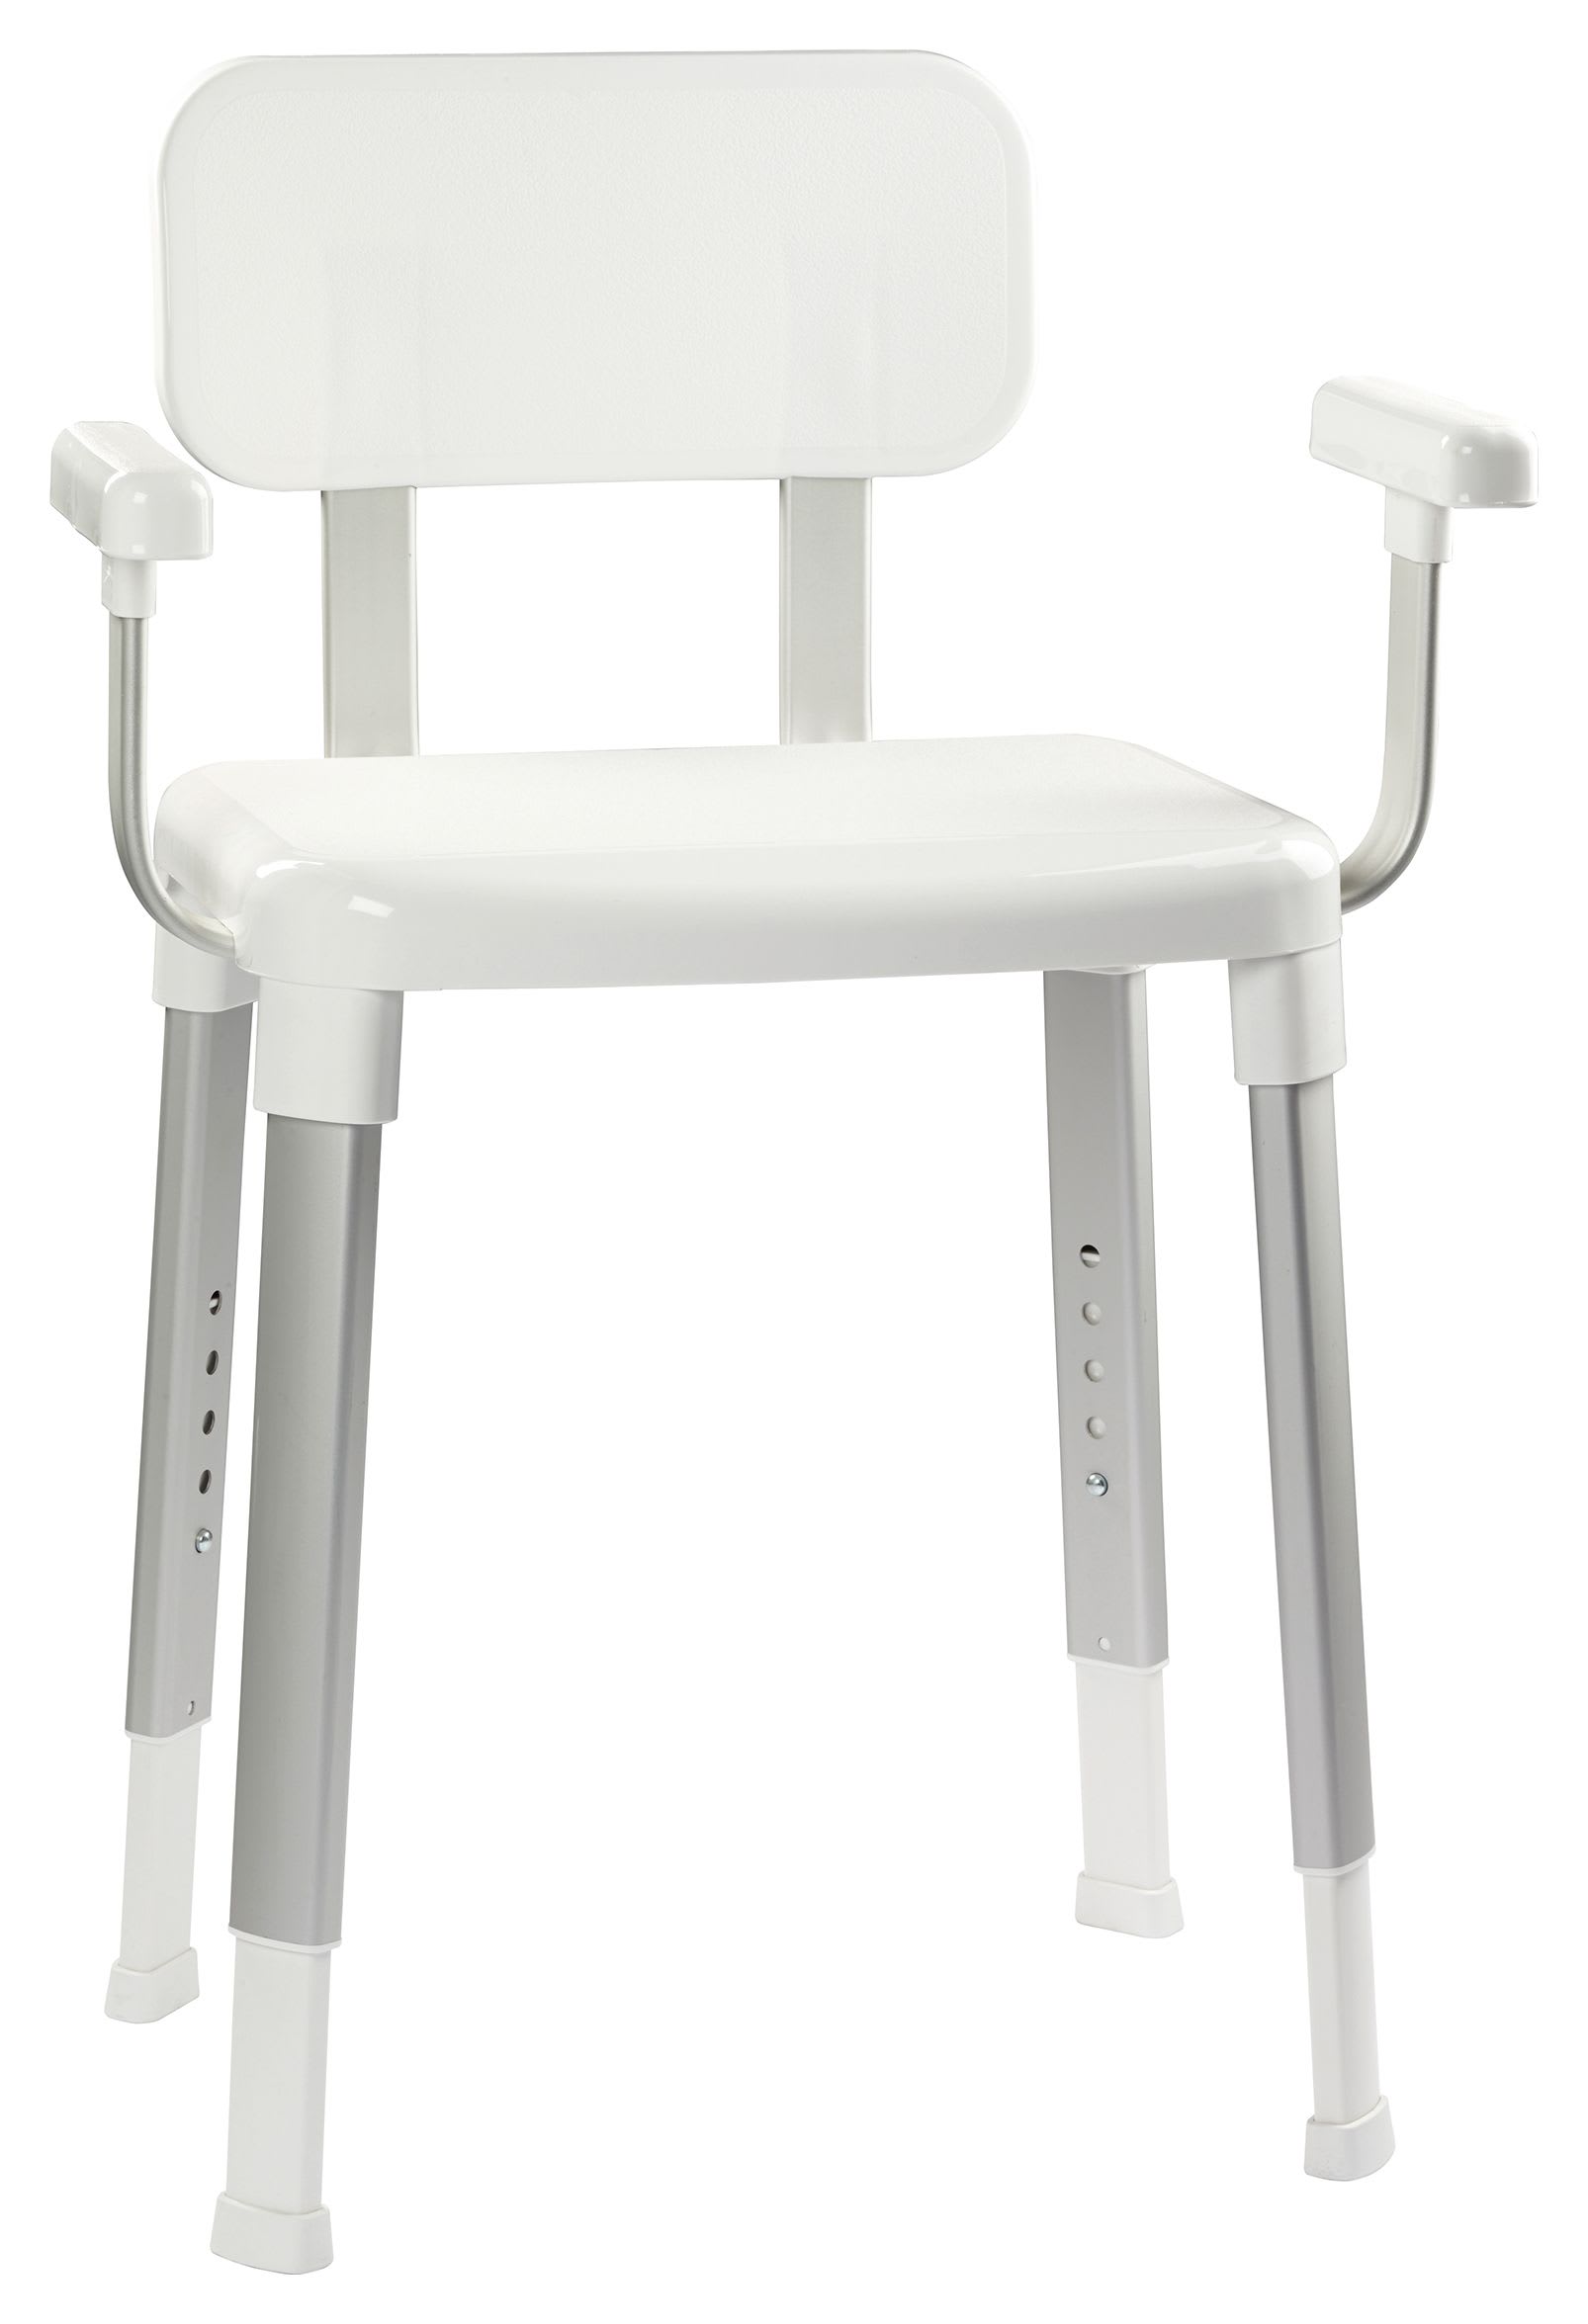 Croydex Modular Chrome & White Shower Seat with